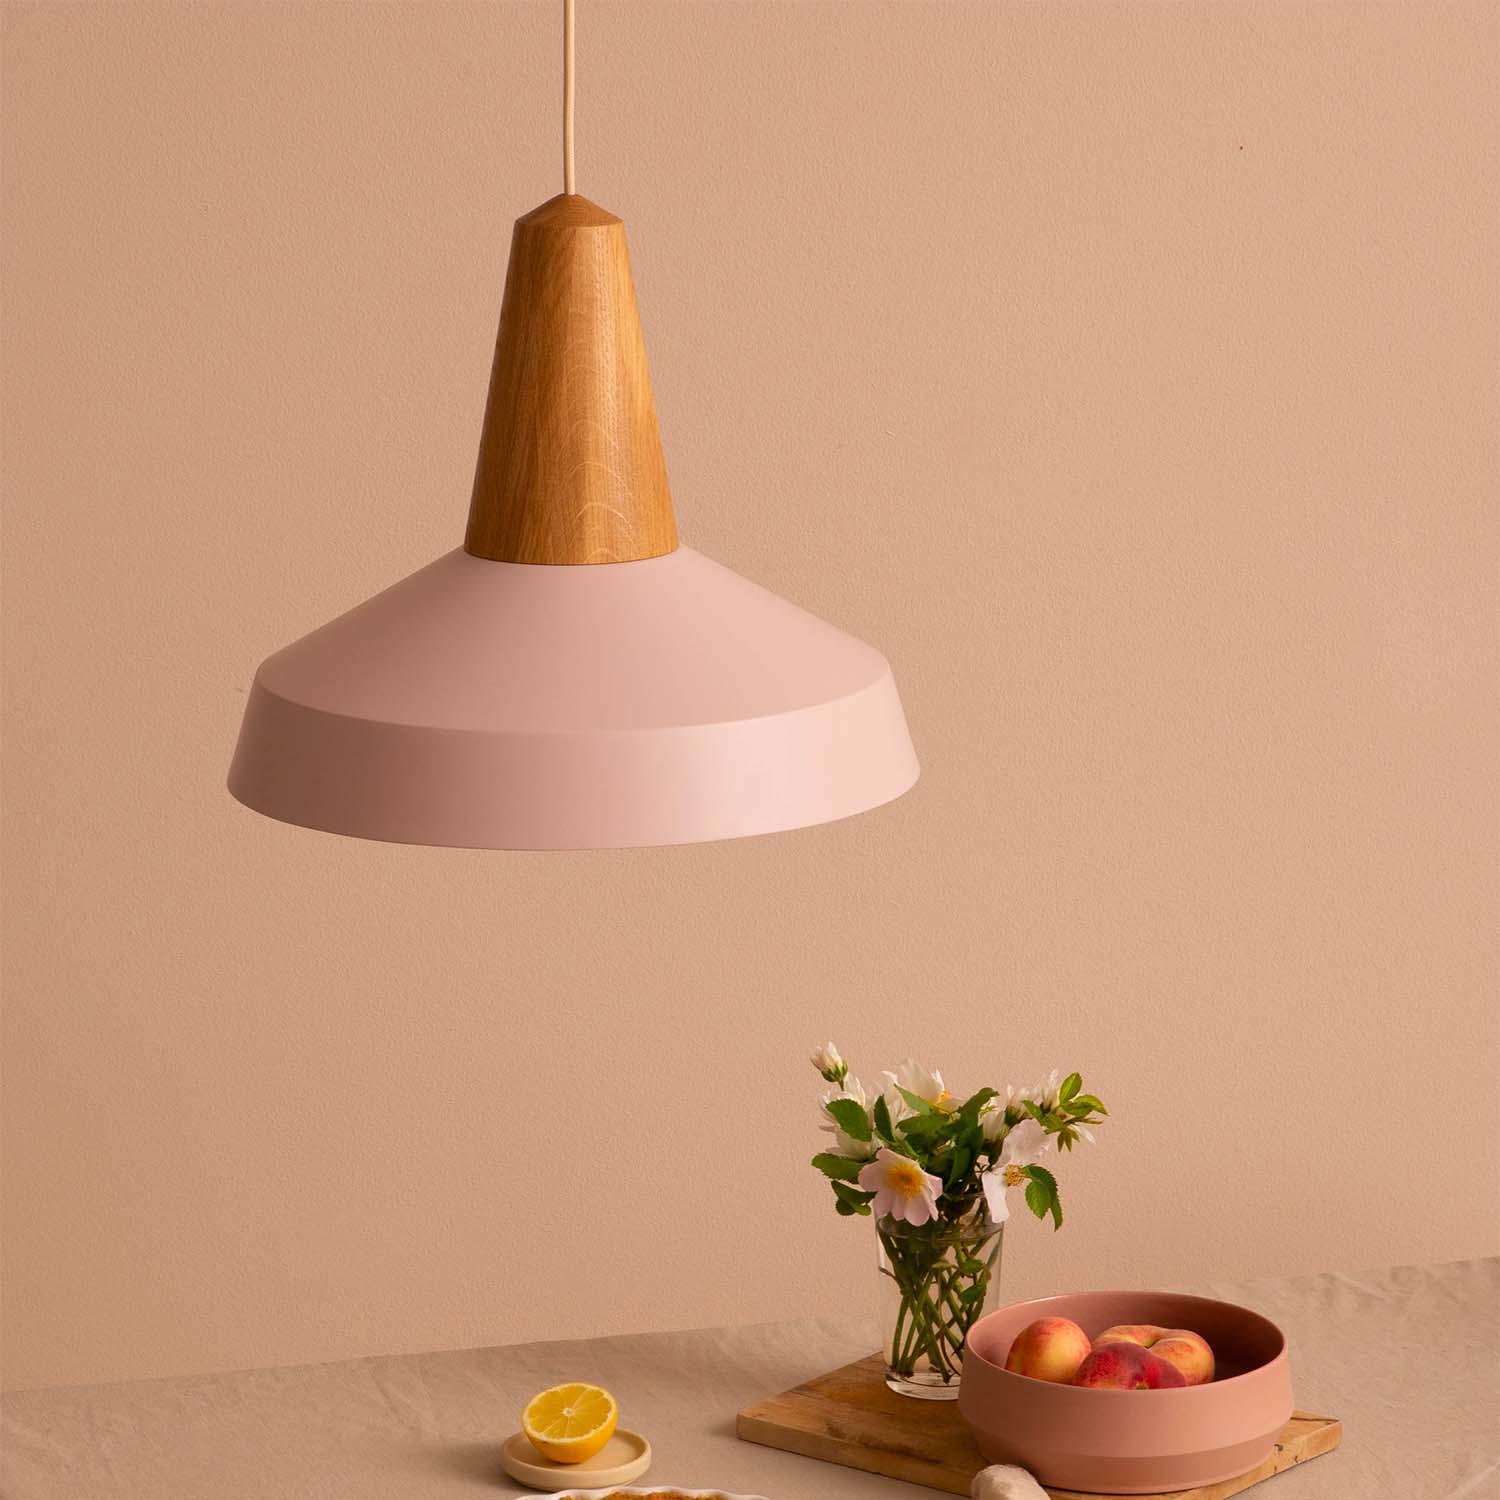 EIKON CIRCUS - Scandinavian conical pendant light, colorful and wood